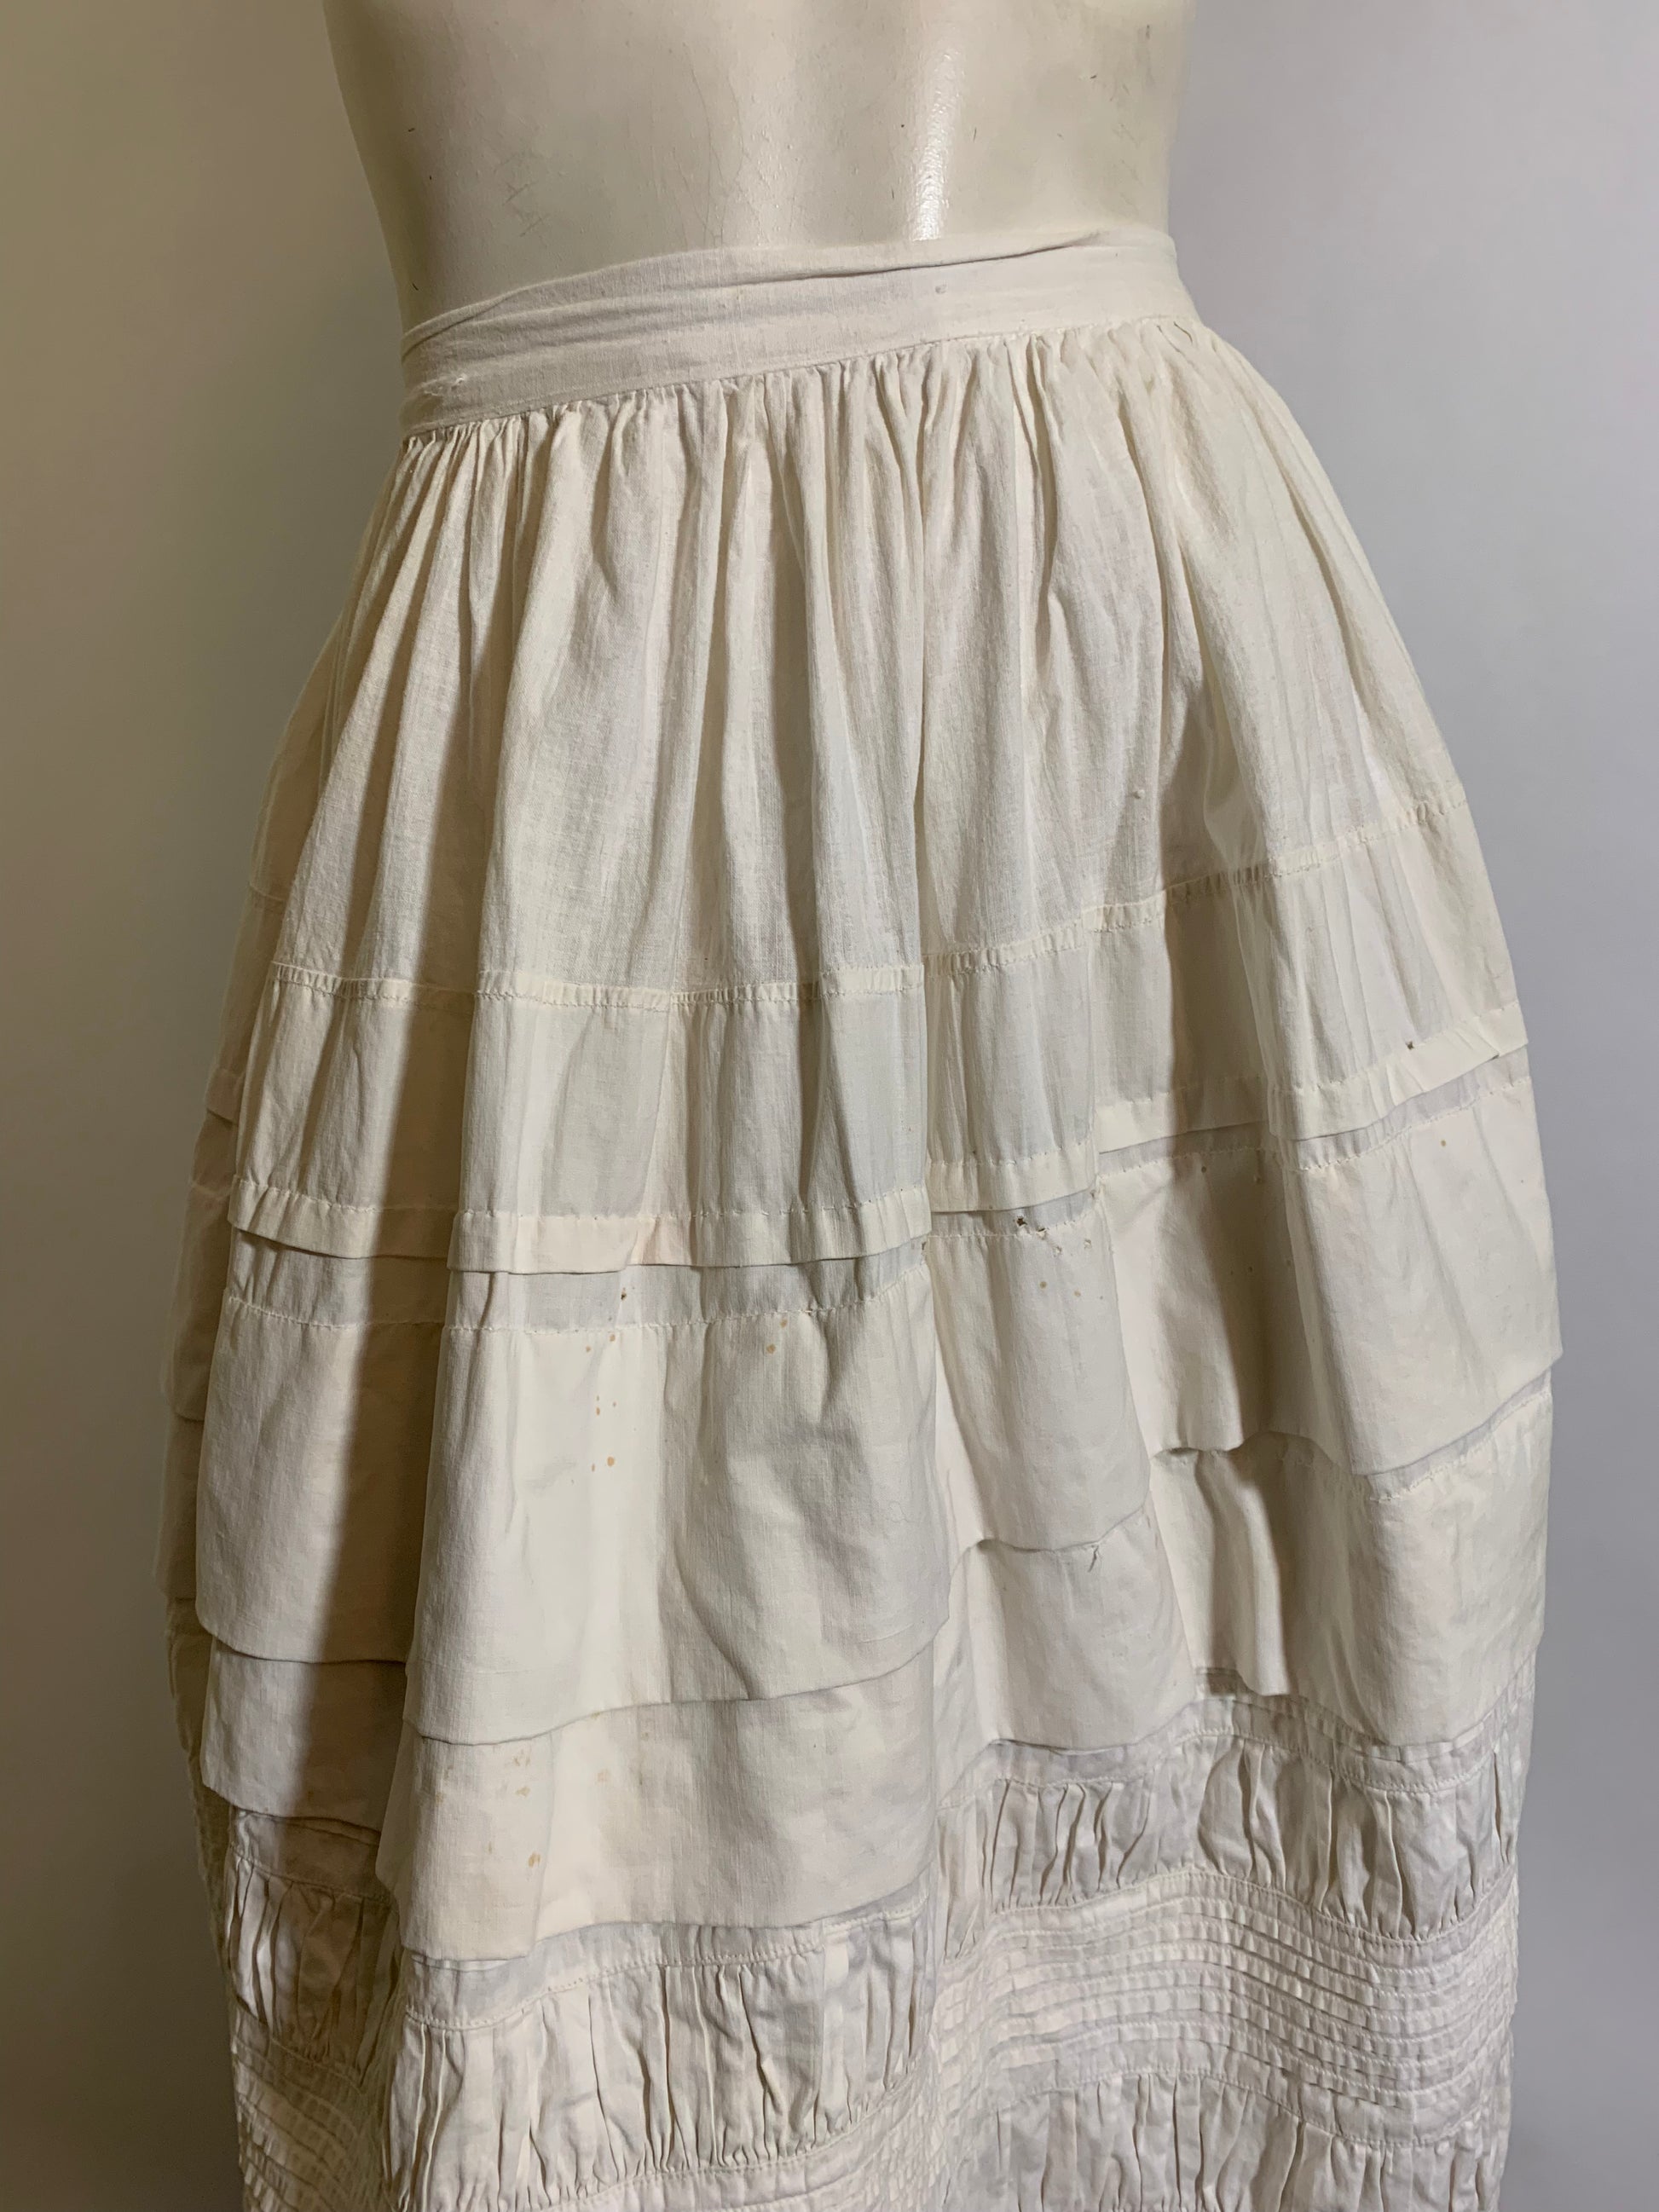 Ruffled and Embroidered Short White Cotton Petticoat circa 1890s –  Dorothea's Closet Vintage